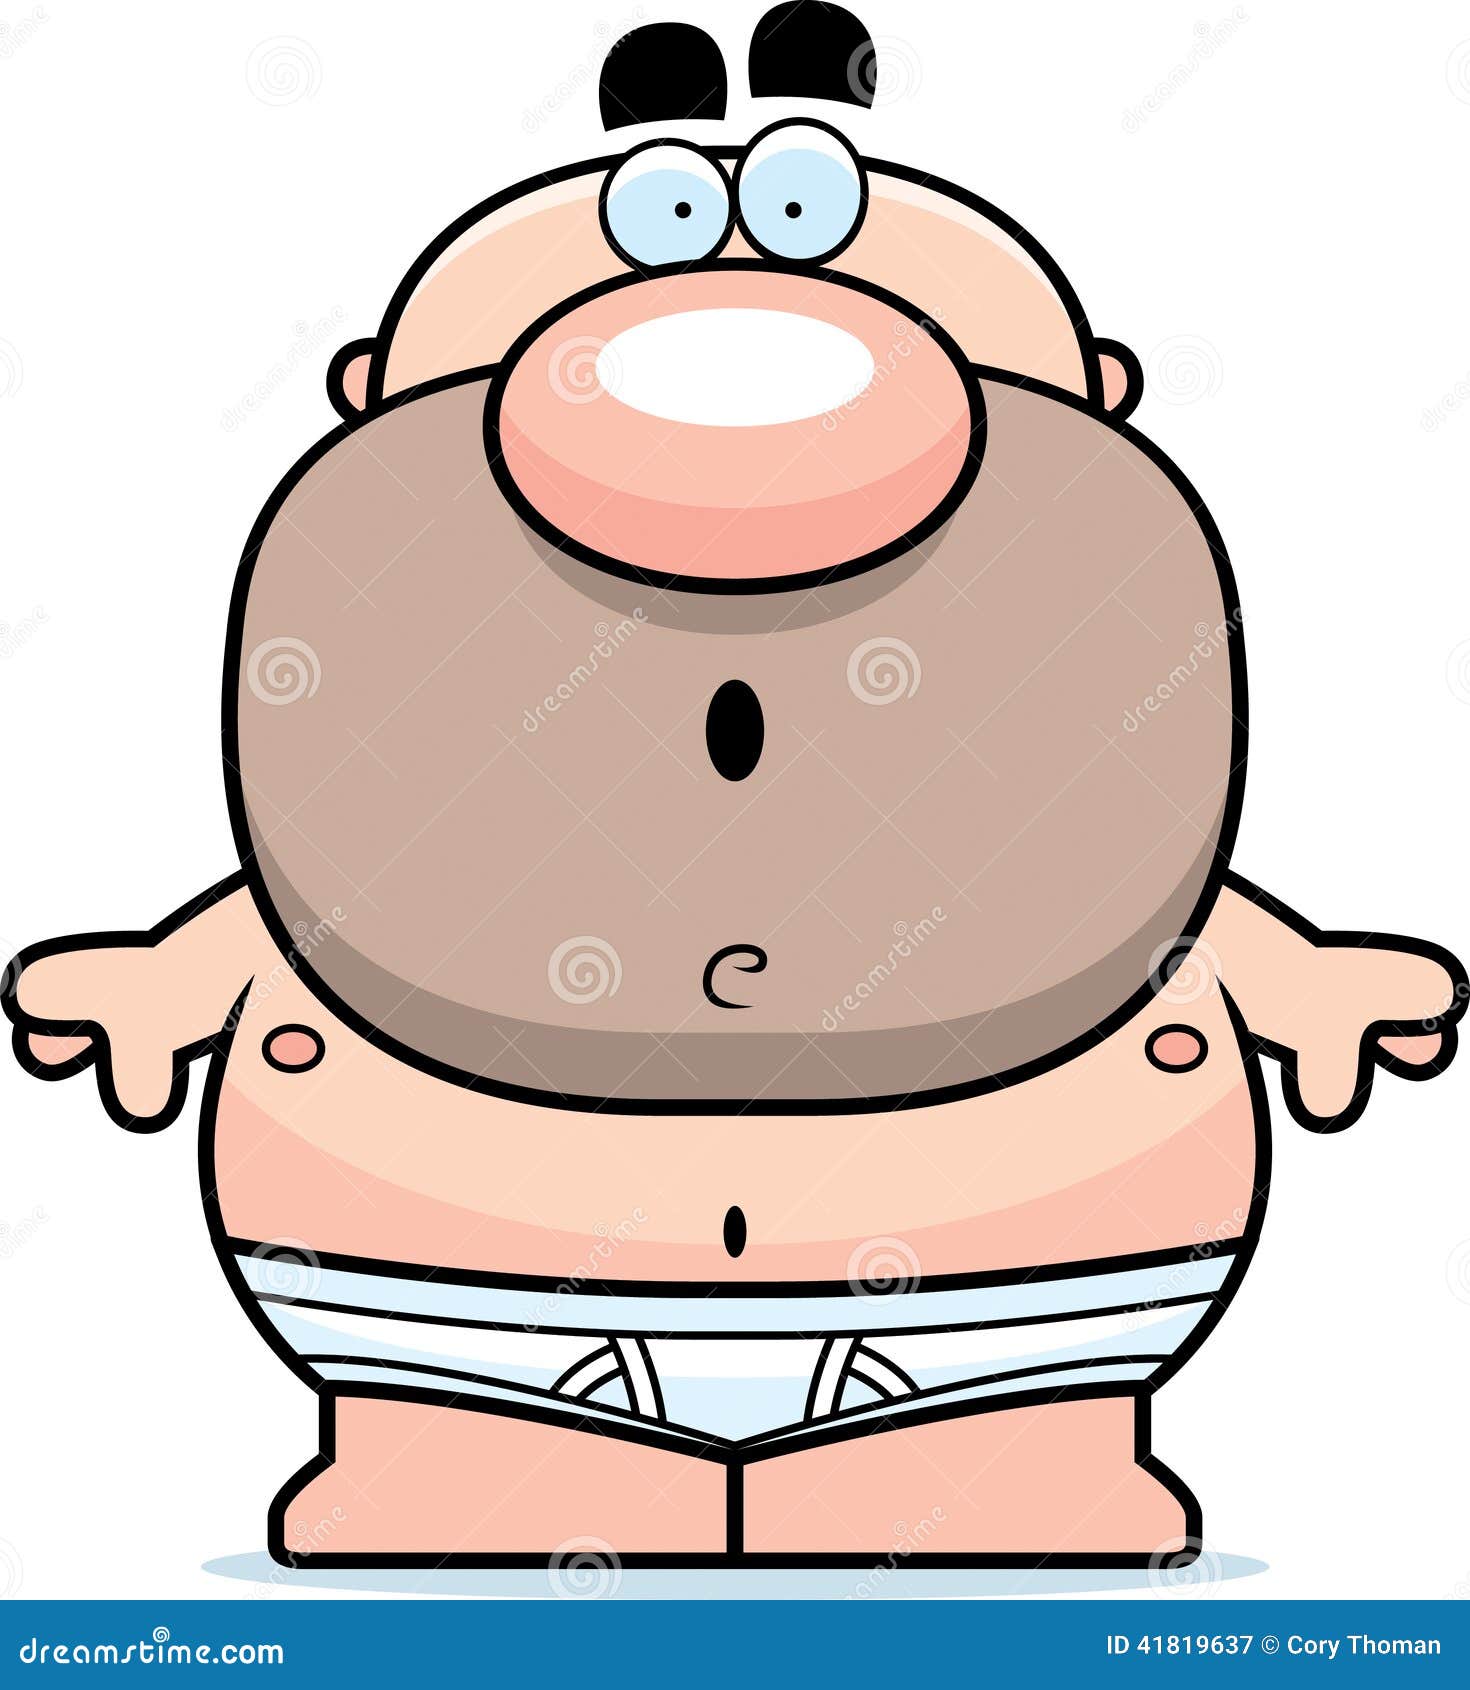 https://thumbs.dreamstime.com/z/cartoon-man-underwear-standing-his-41819637.jpg